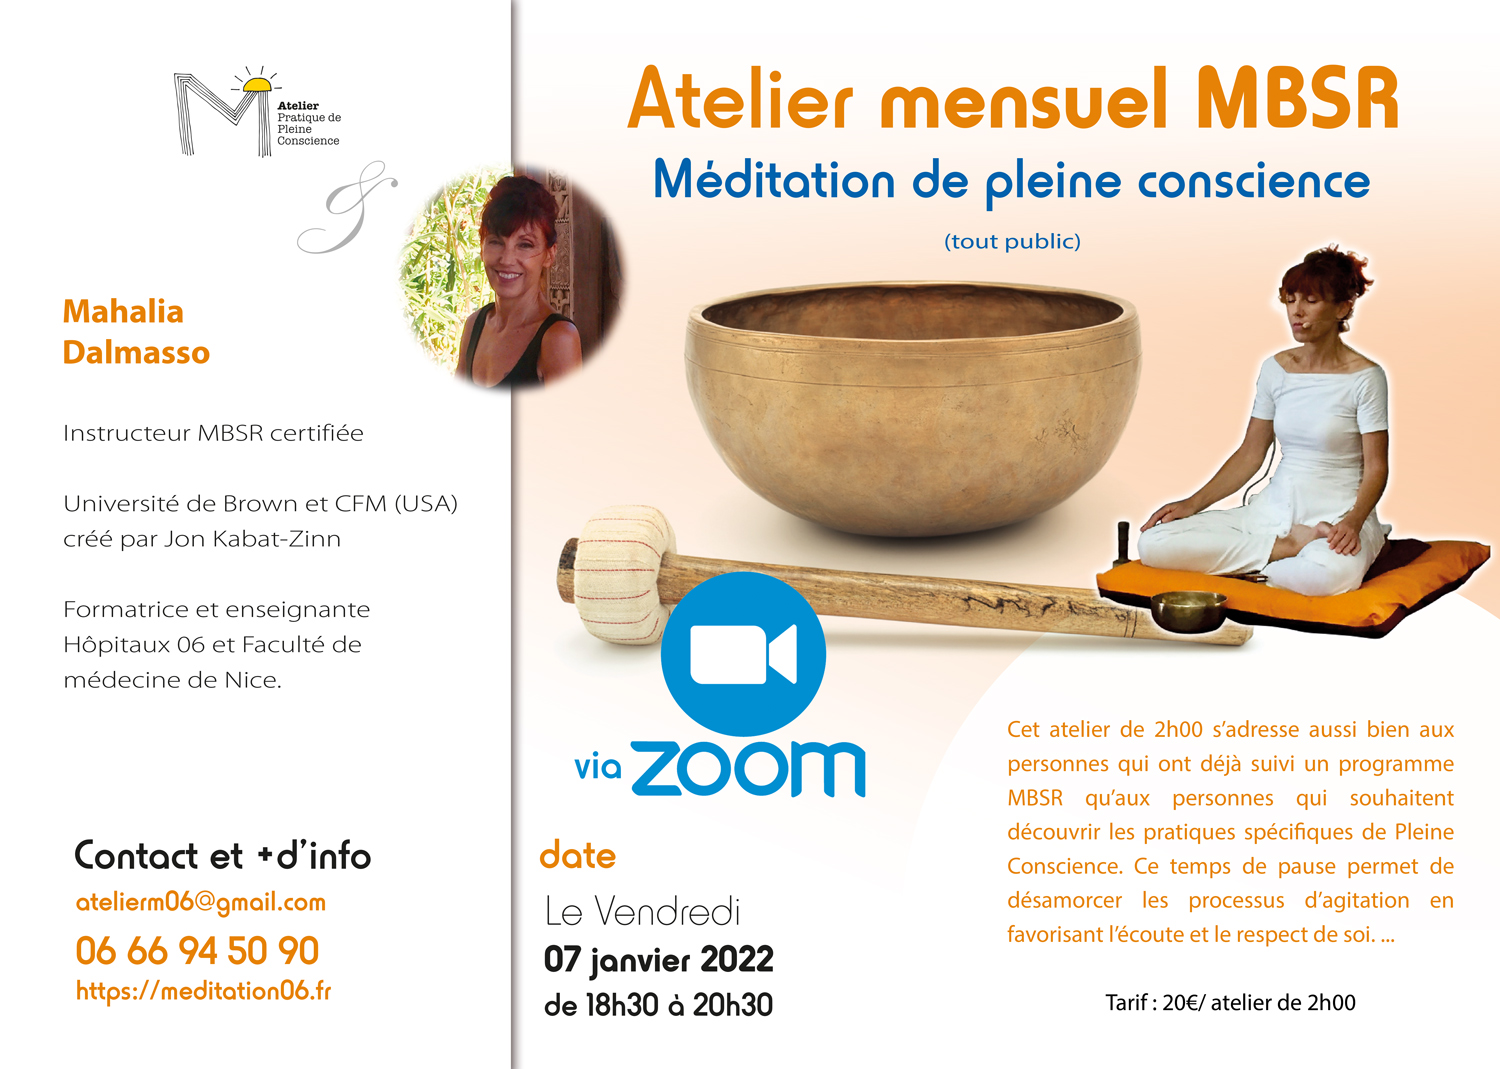 atelier mensuel de meditation 2022